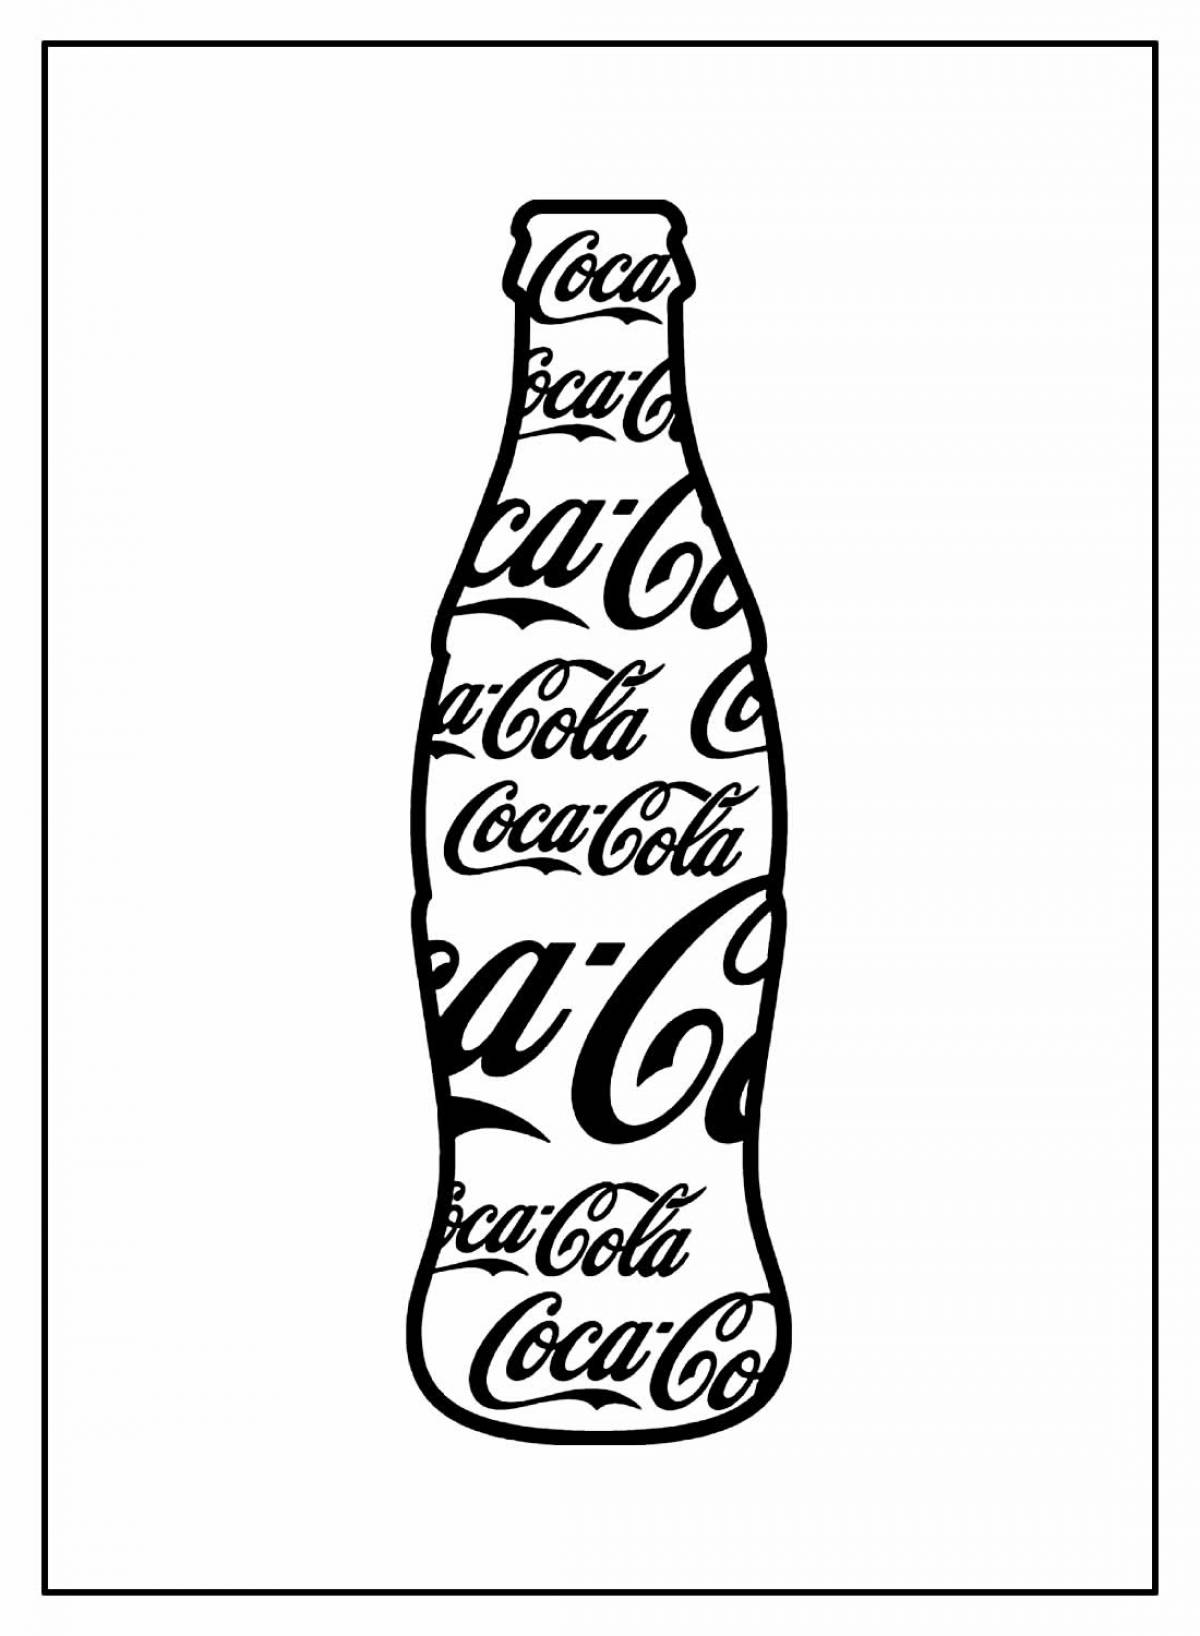 Coca cola #4